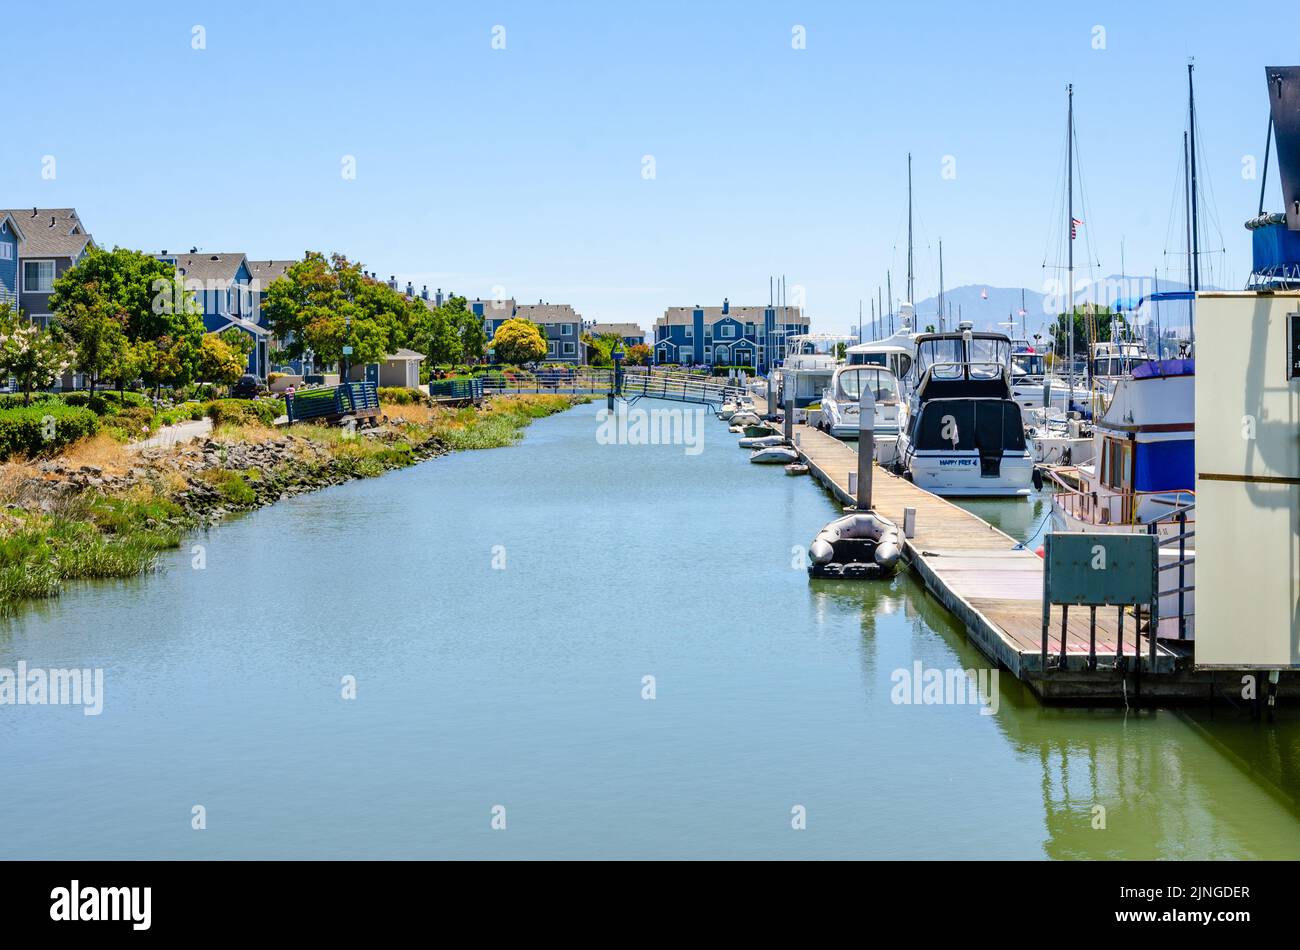 Looking along a waterway in Benicia Marina in California, USAi Stock Photo